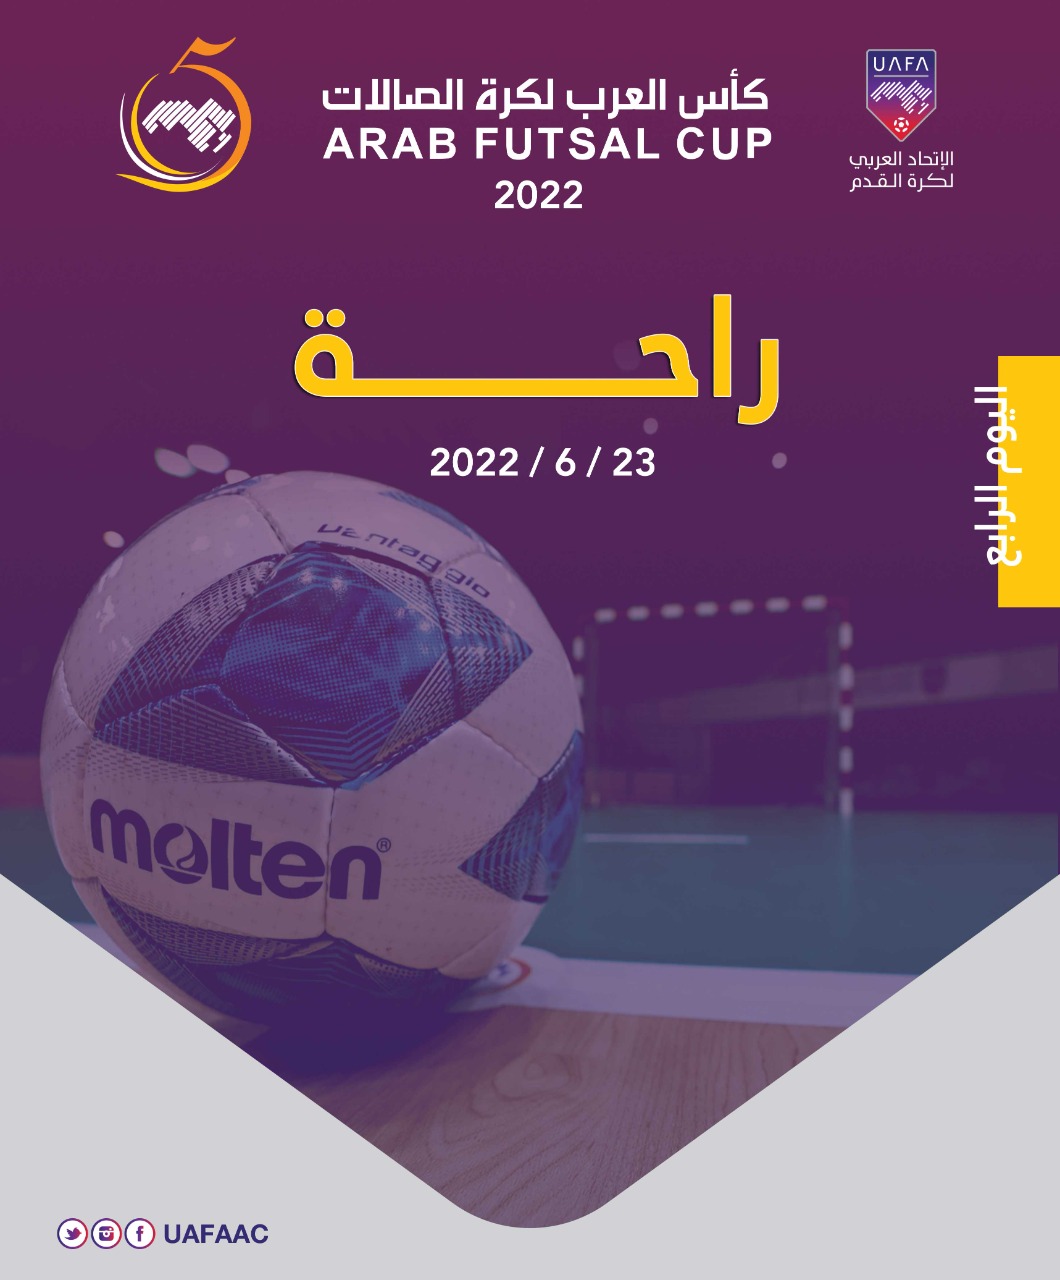 Futsal / Coupe arabe 2022:  Ce jeudi, pas de match mais des conférences de presse